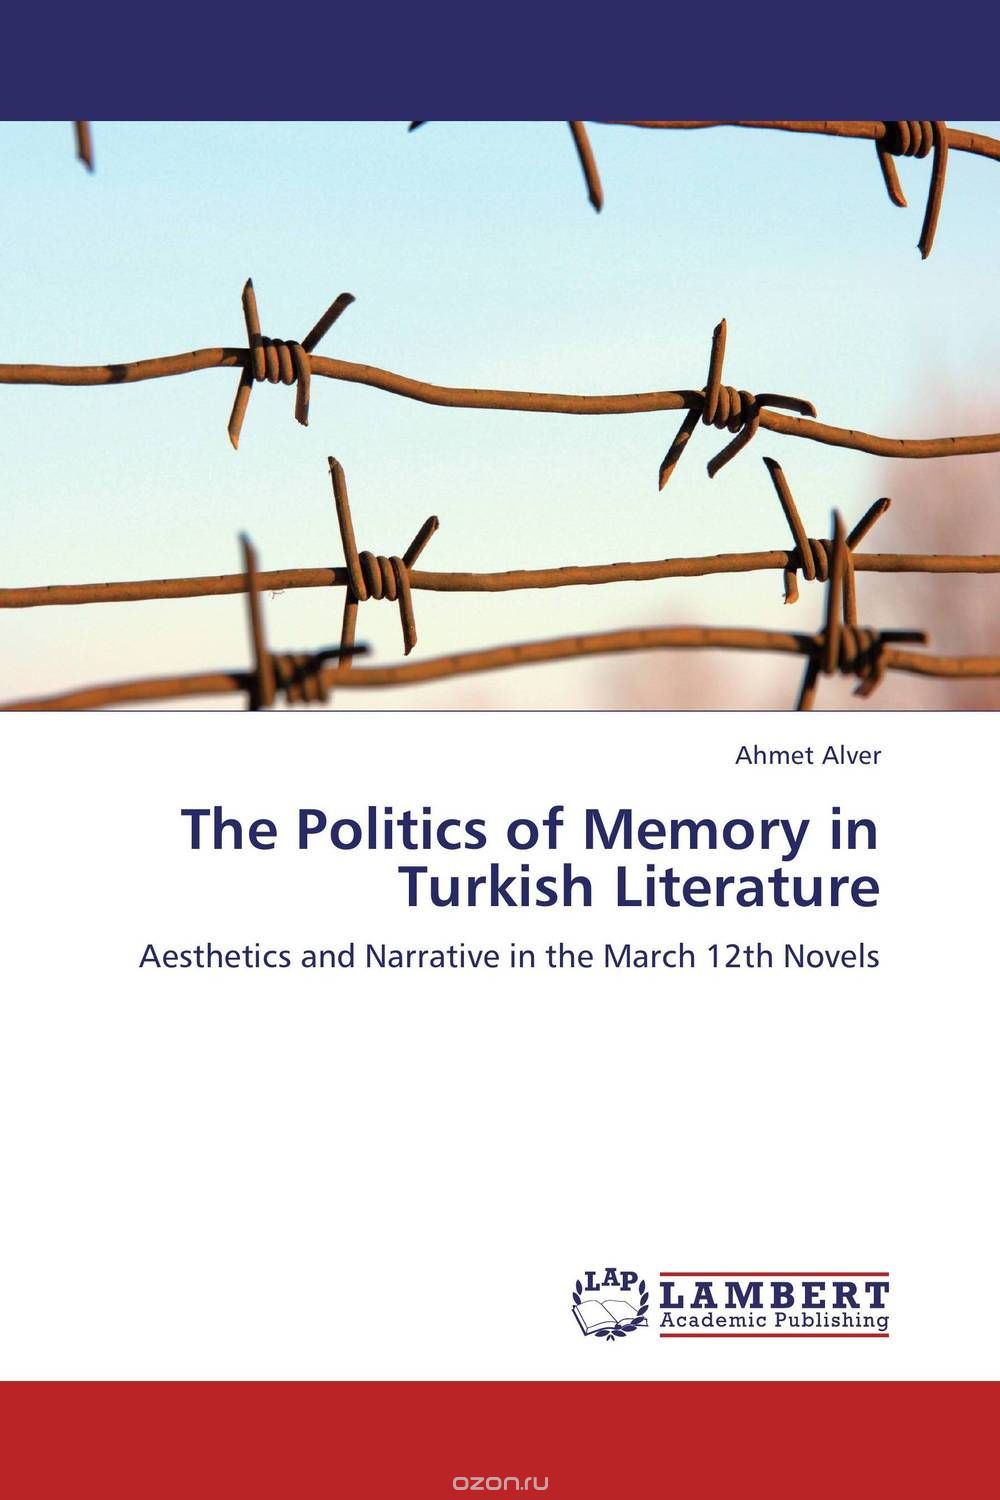 Скачать книгу "The Politics of Memory in Turkish Literature"